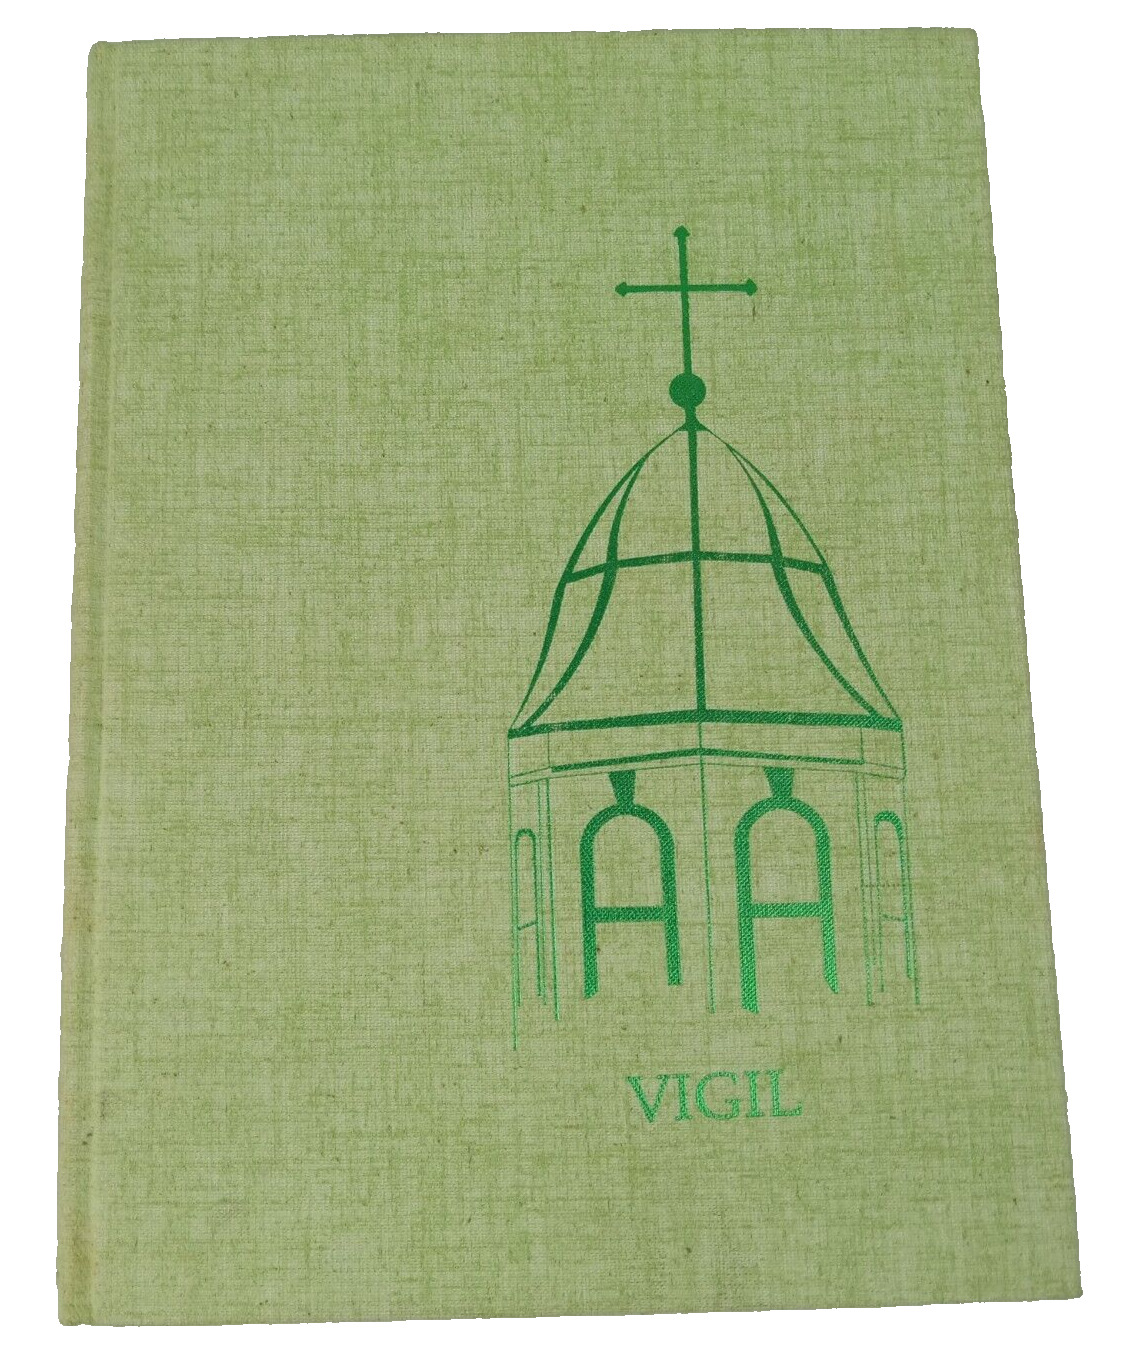 1977 Central Catholic High School Canton Ohio VIGIL 77 Year Book Annual Yearbook